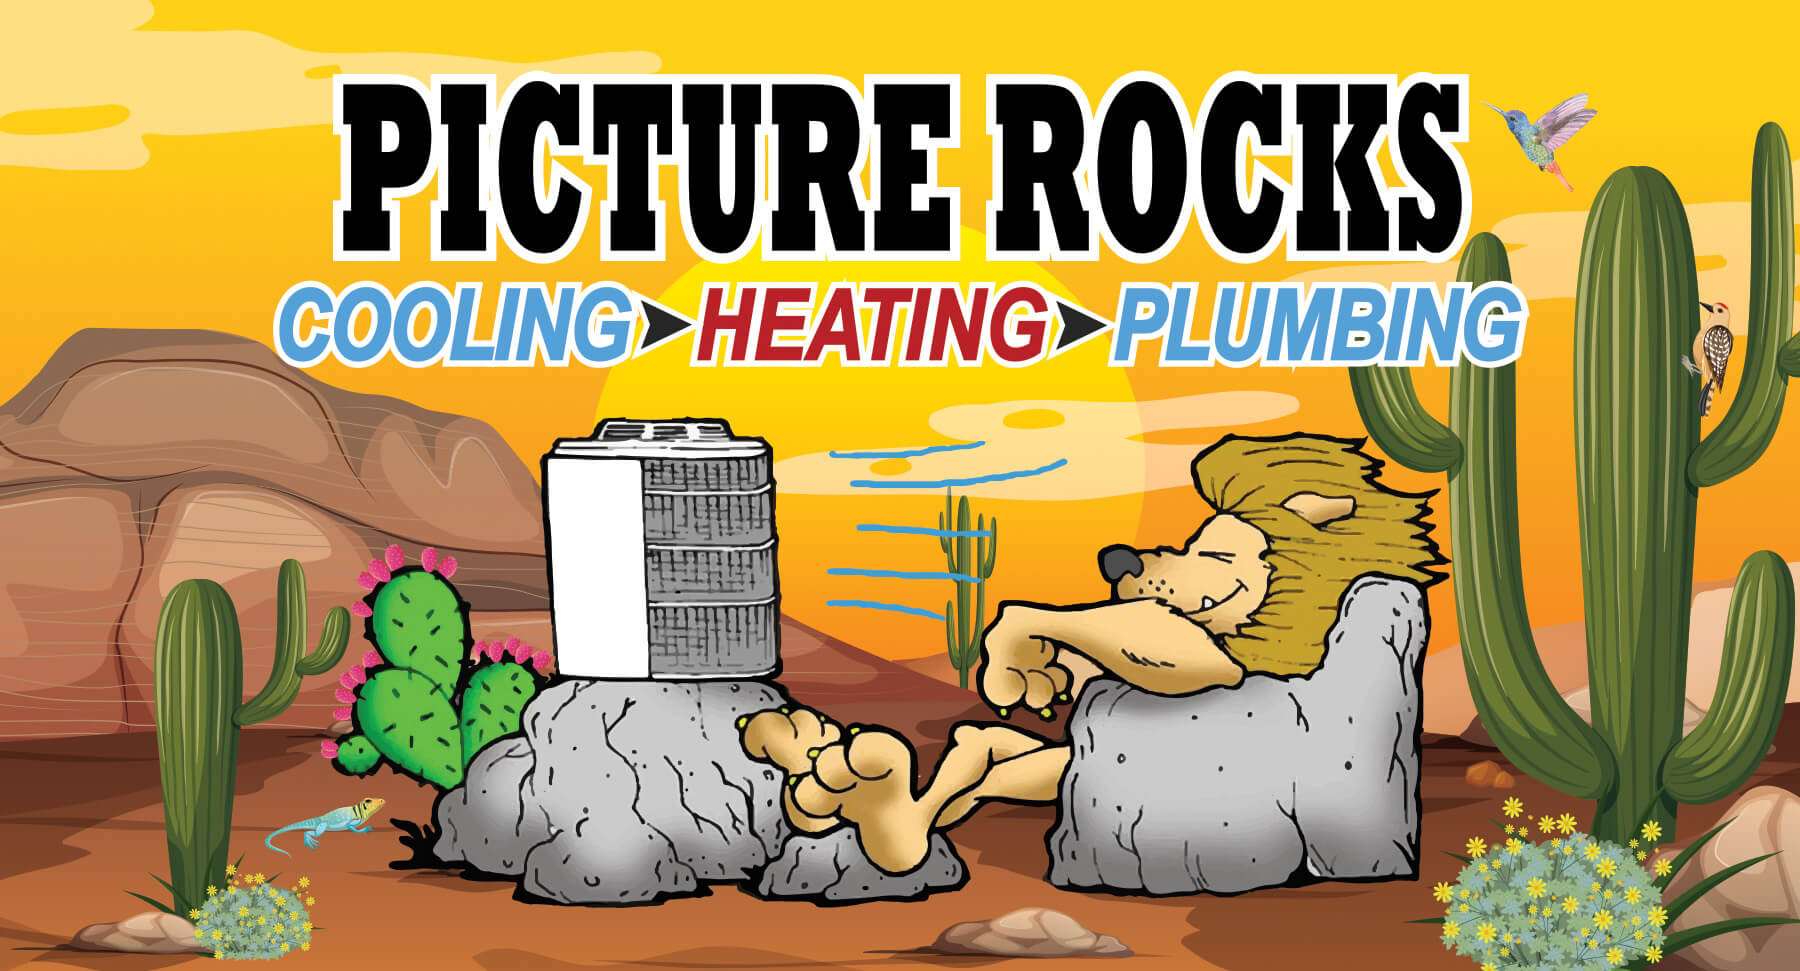 Picture Rocks Cooling Heating & Plumbing